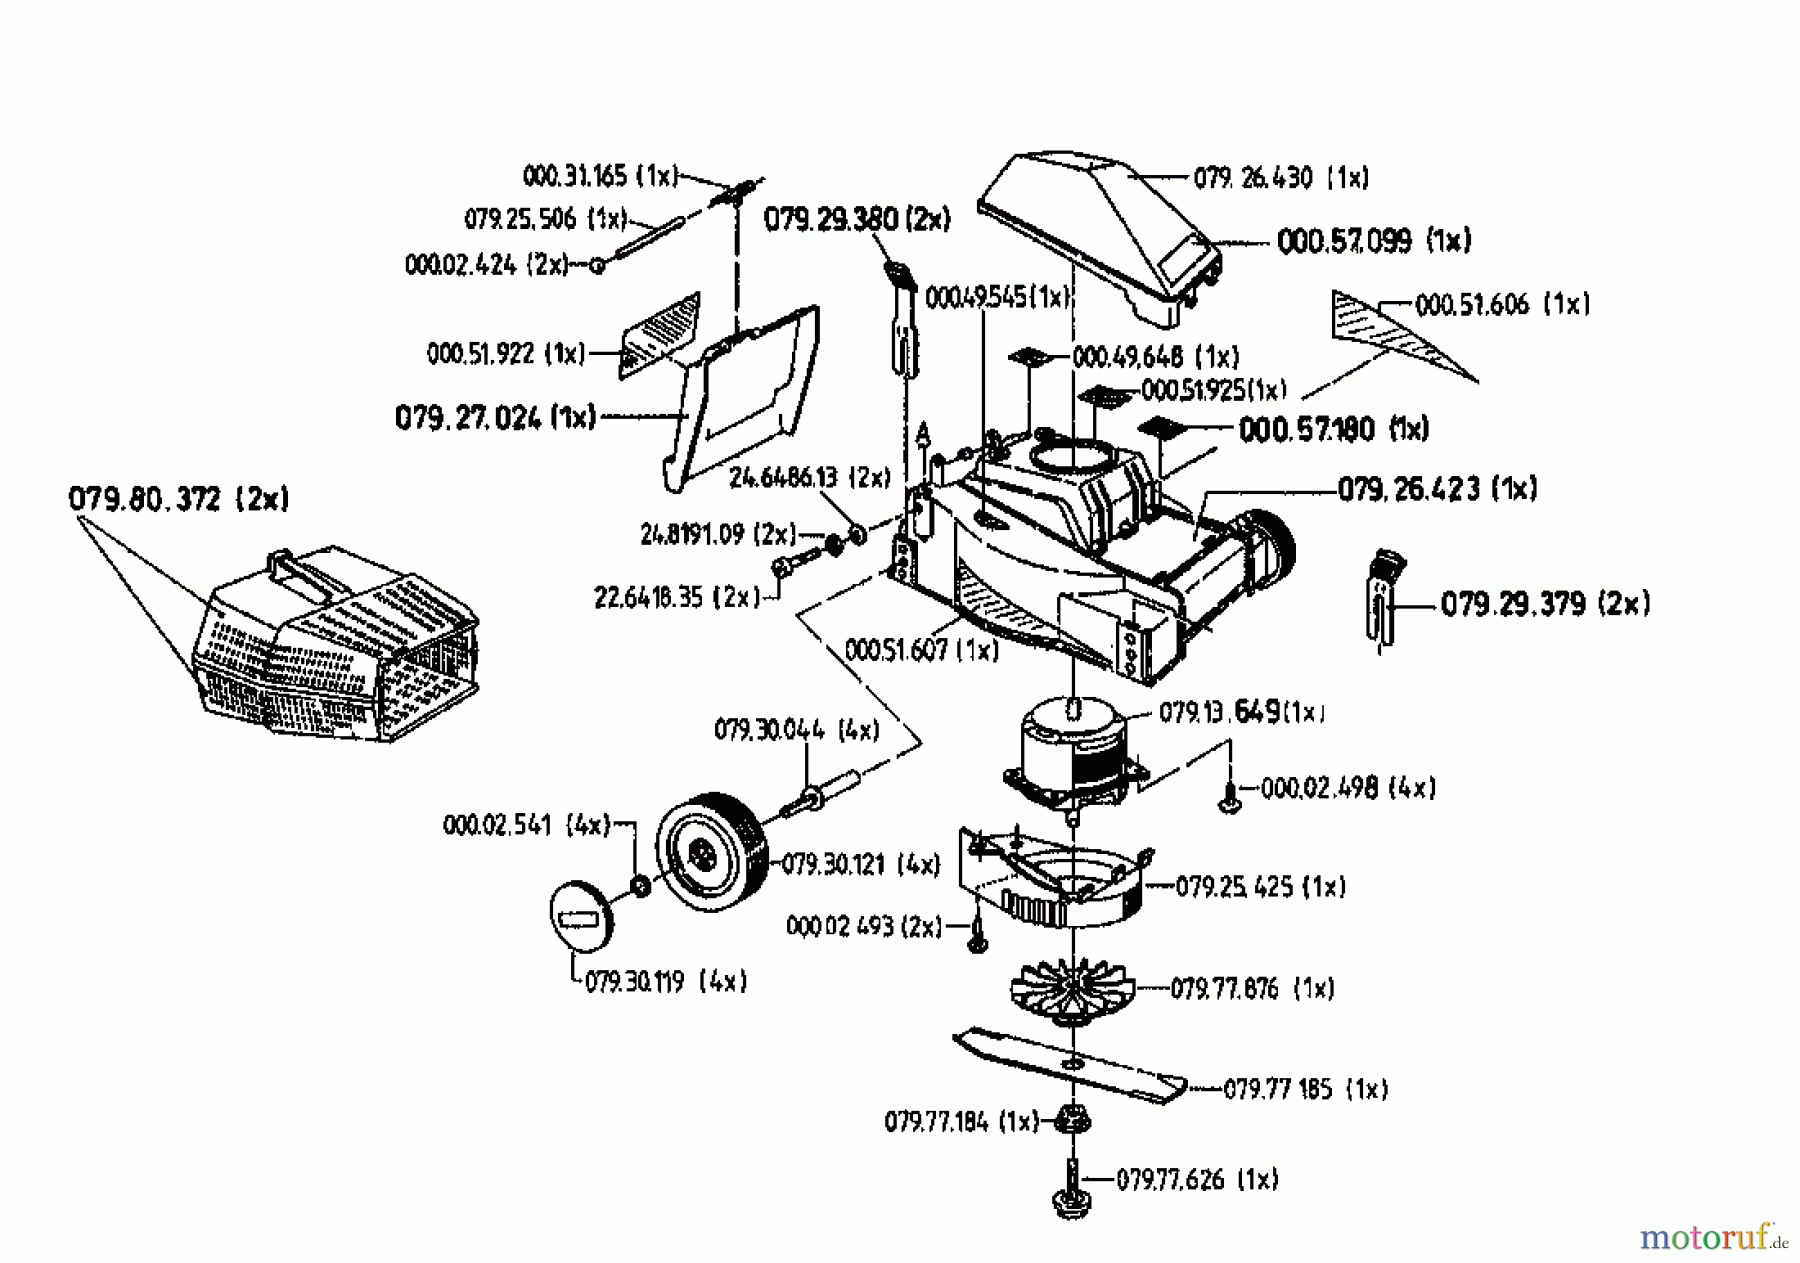  Gutbrod Electric mower HE 32-1000 PL 04027.06  (1996) Basic machine